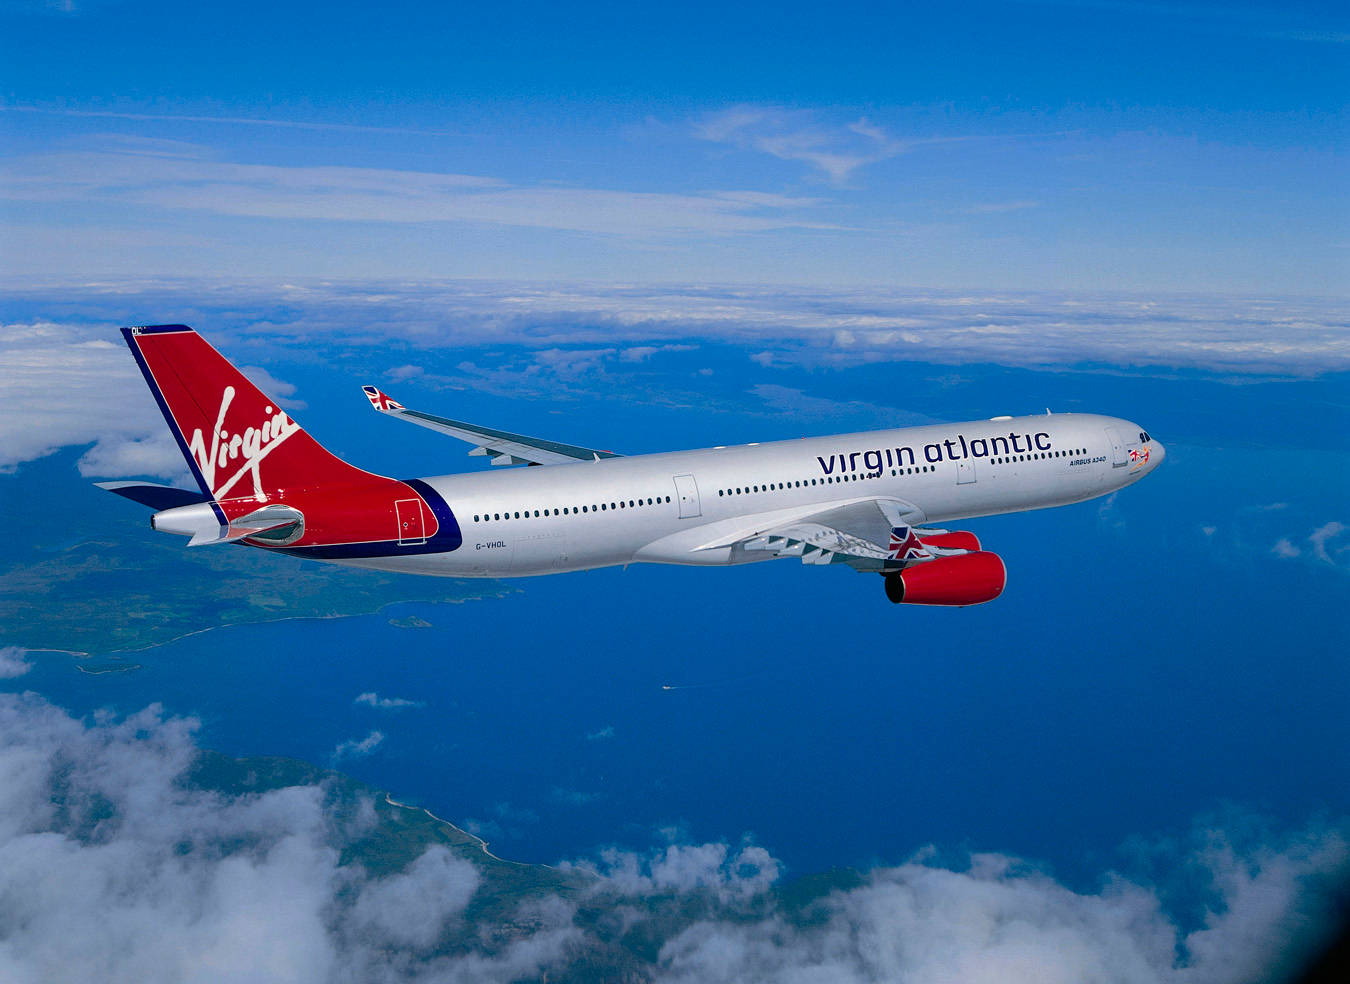 Aufstiegeines Virgin Atlantic Flugzeugs Wallpaper